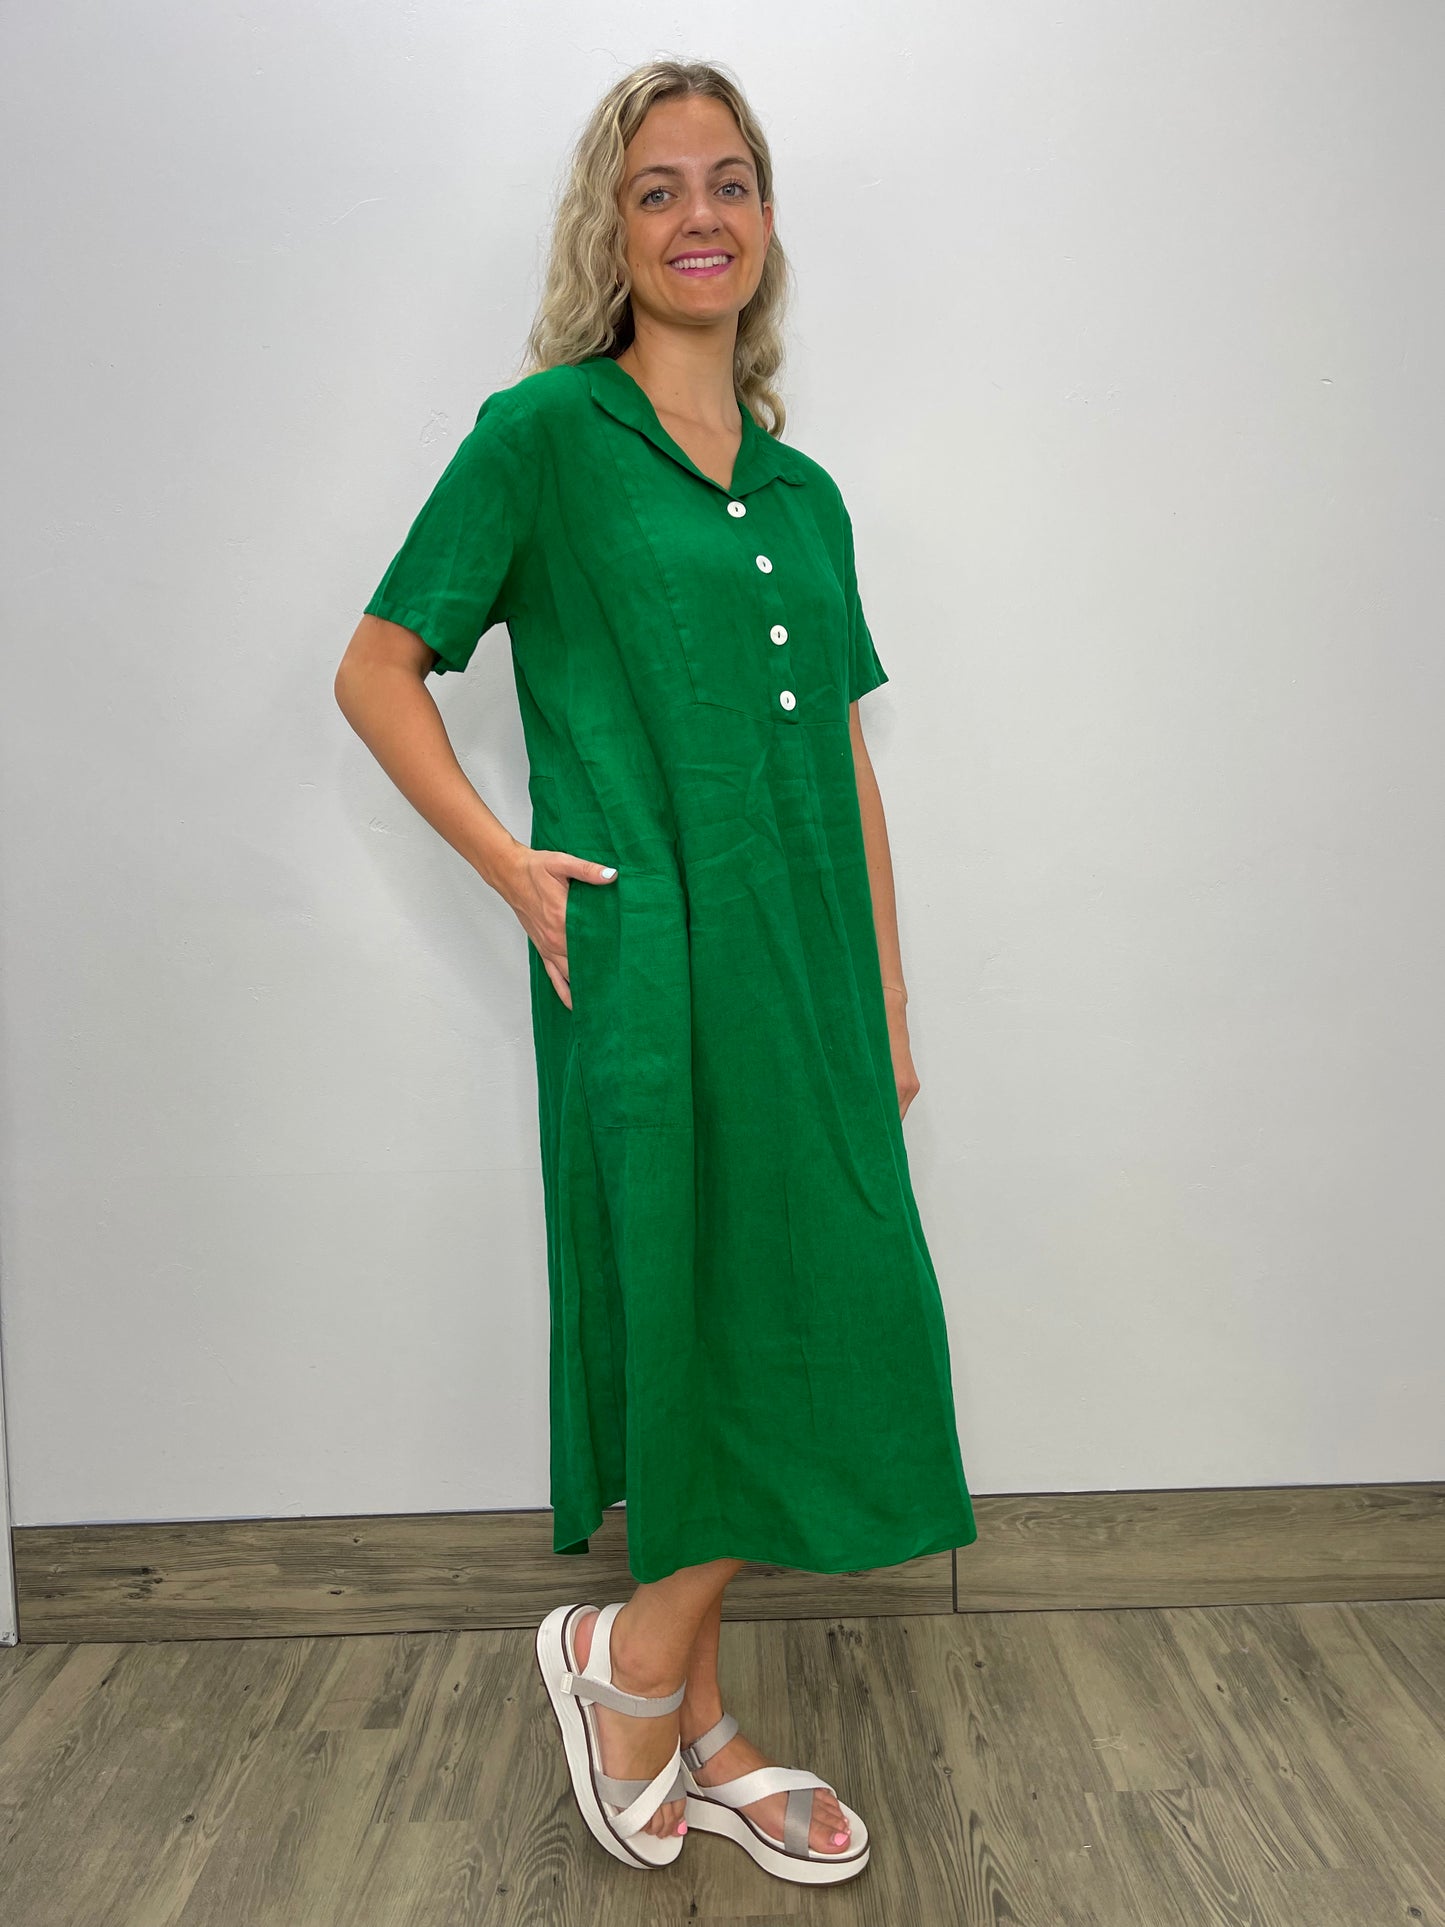 Palm Short Sleeve Linen Dress with Pockets